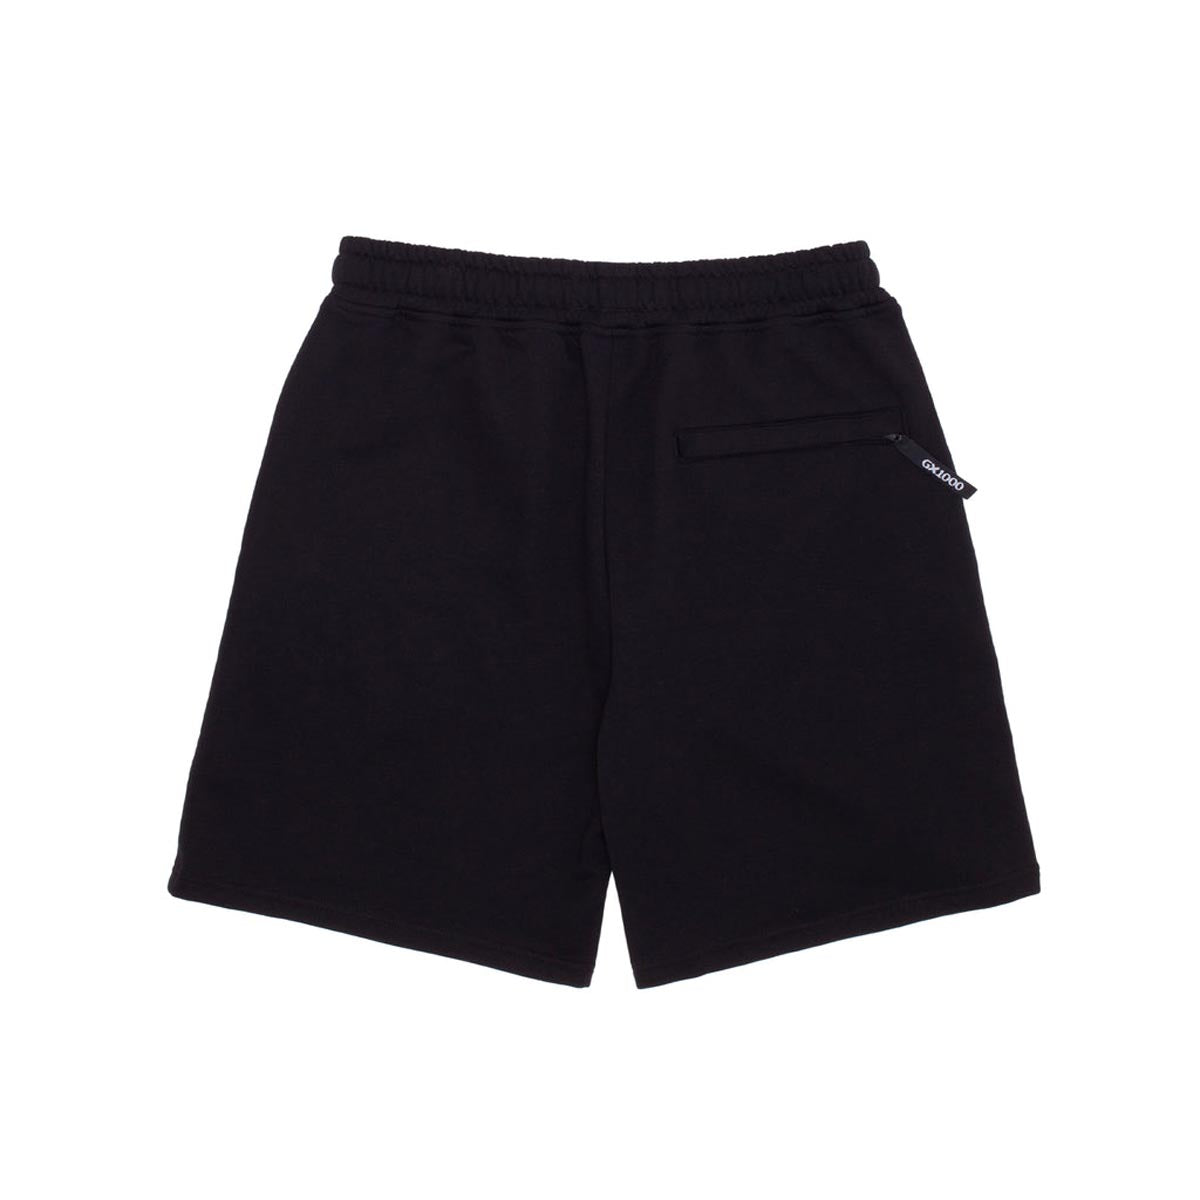 GX1000 Sweat Shorts - Black image 2